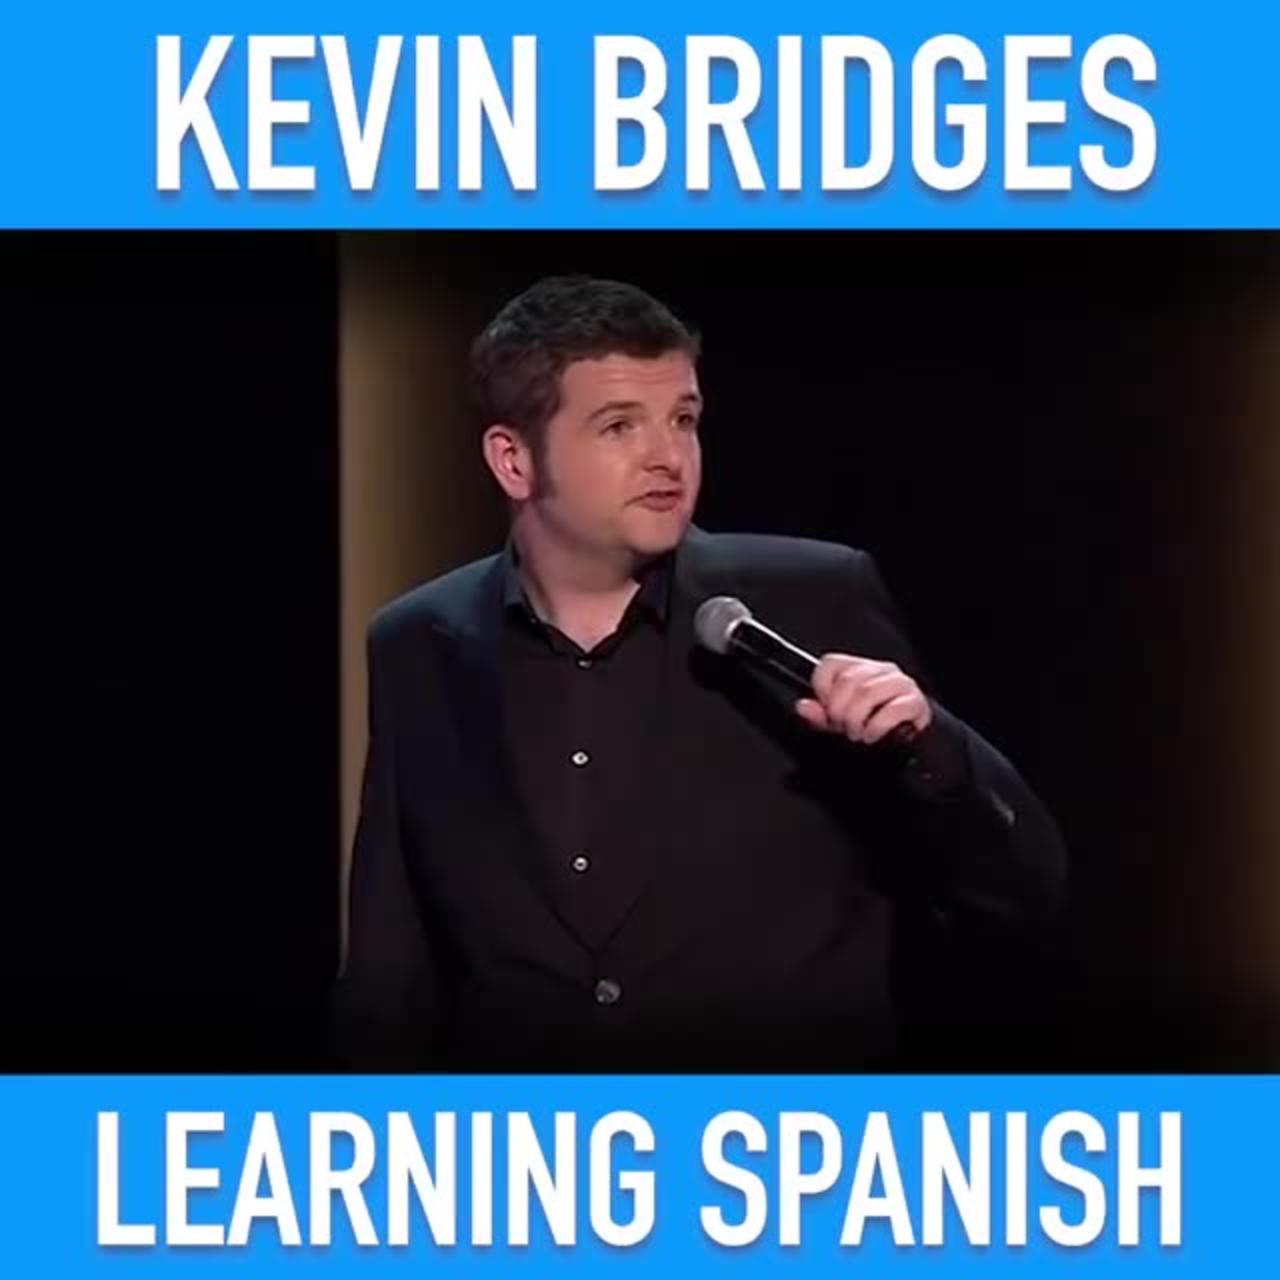 Kevin bridges